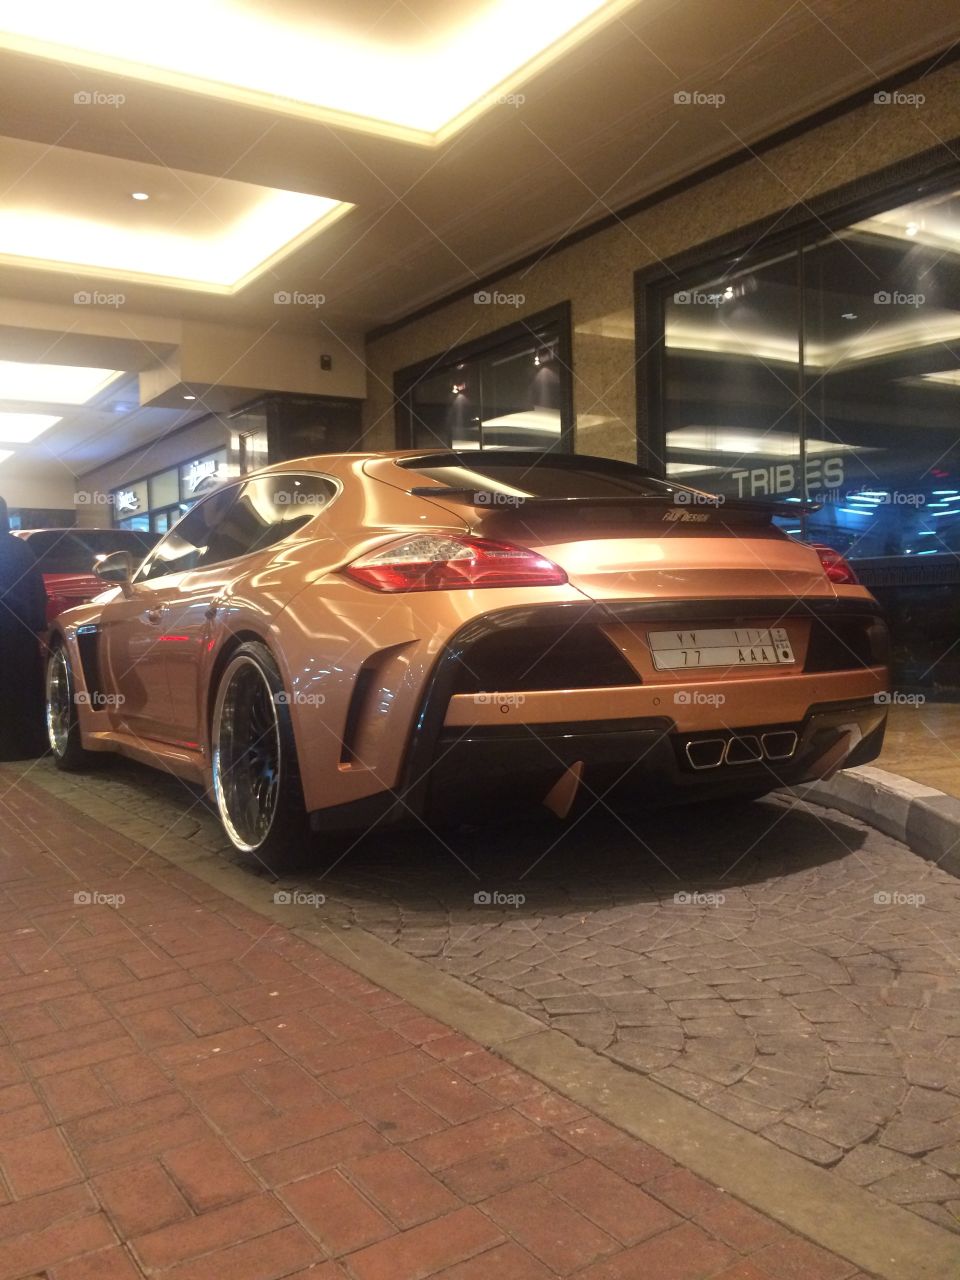 A custom Porsche Panamera in Dubai!